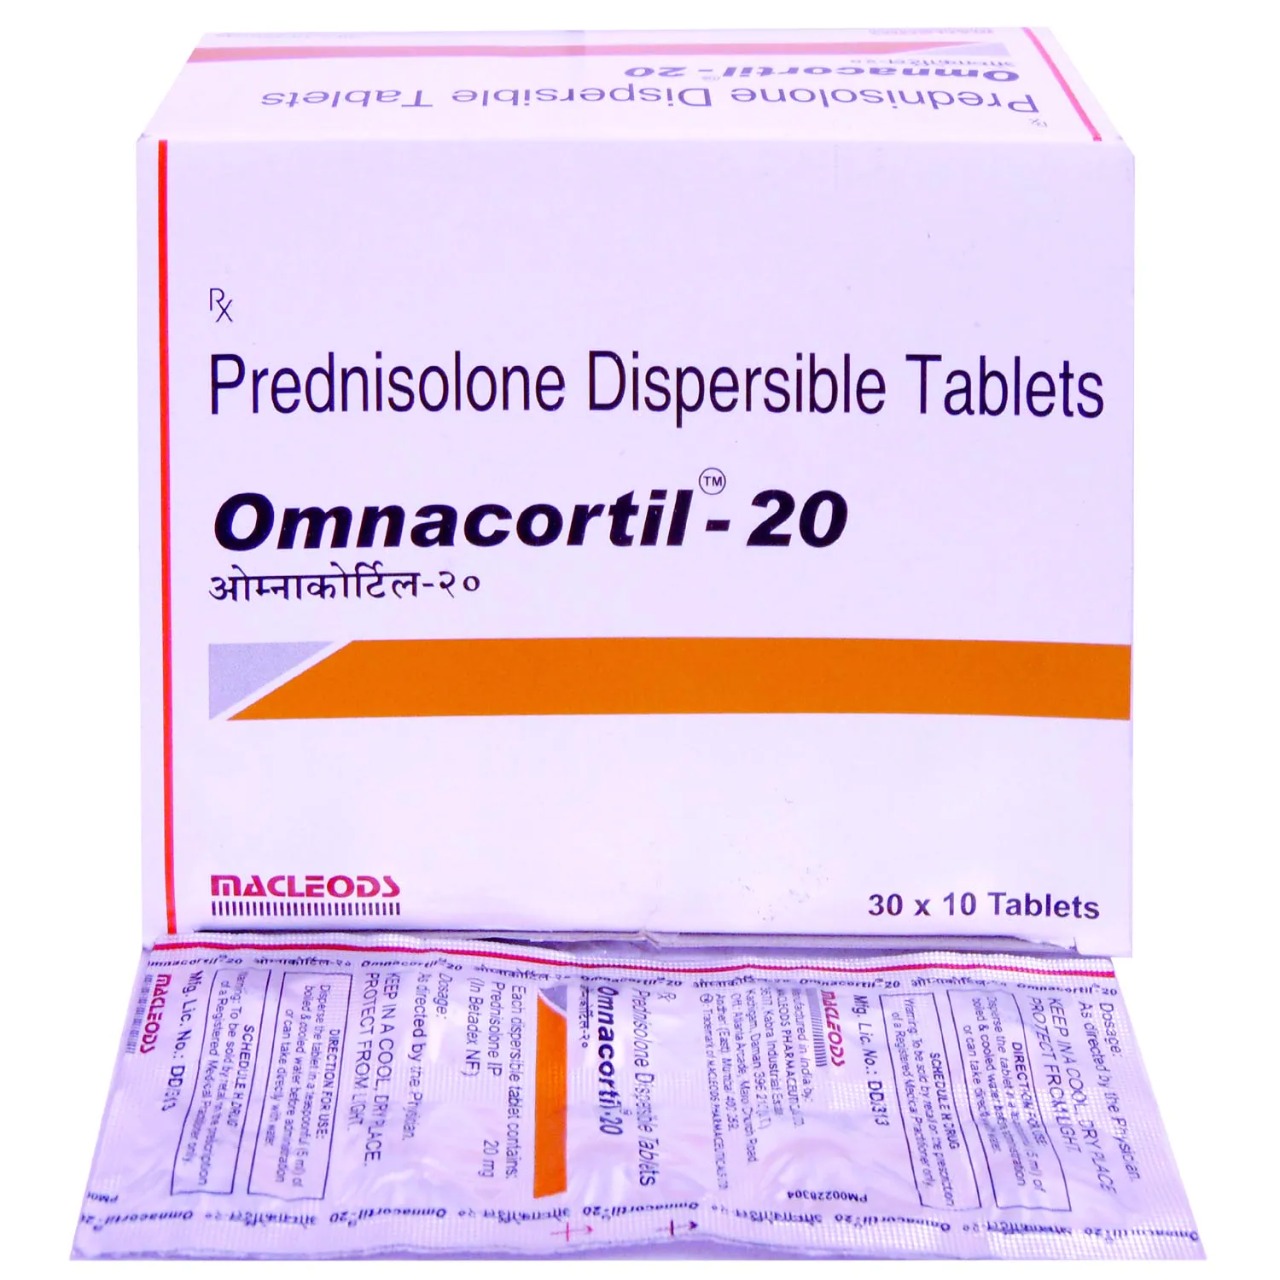 Dispersible Tablets. Преднизолон таблетки 20мг. Преднизолон 5 мг. Преднизолон на латинском. Преднизолон 5 мг купить